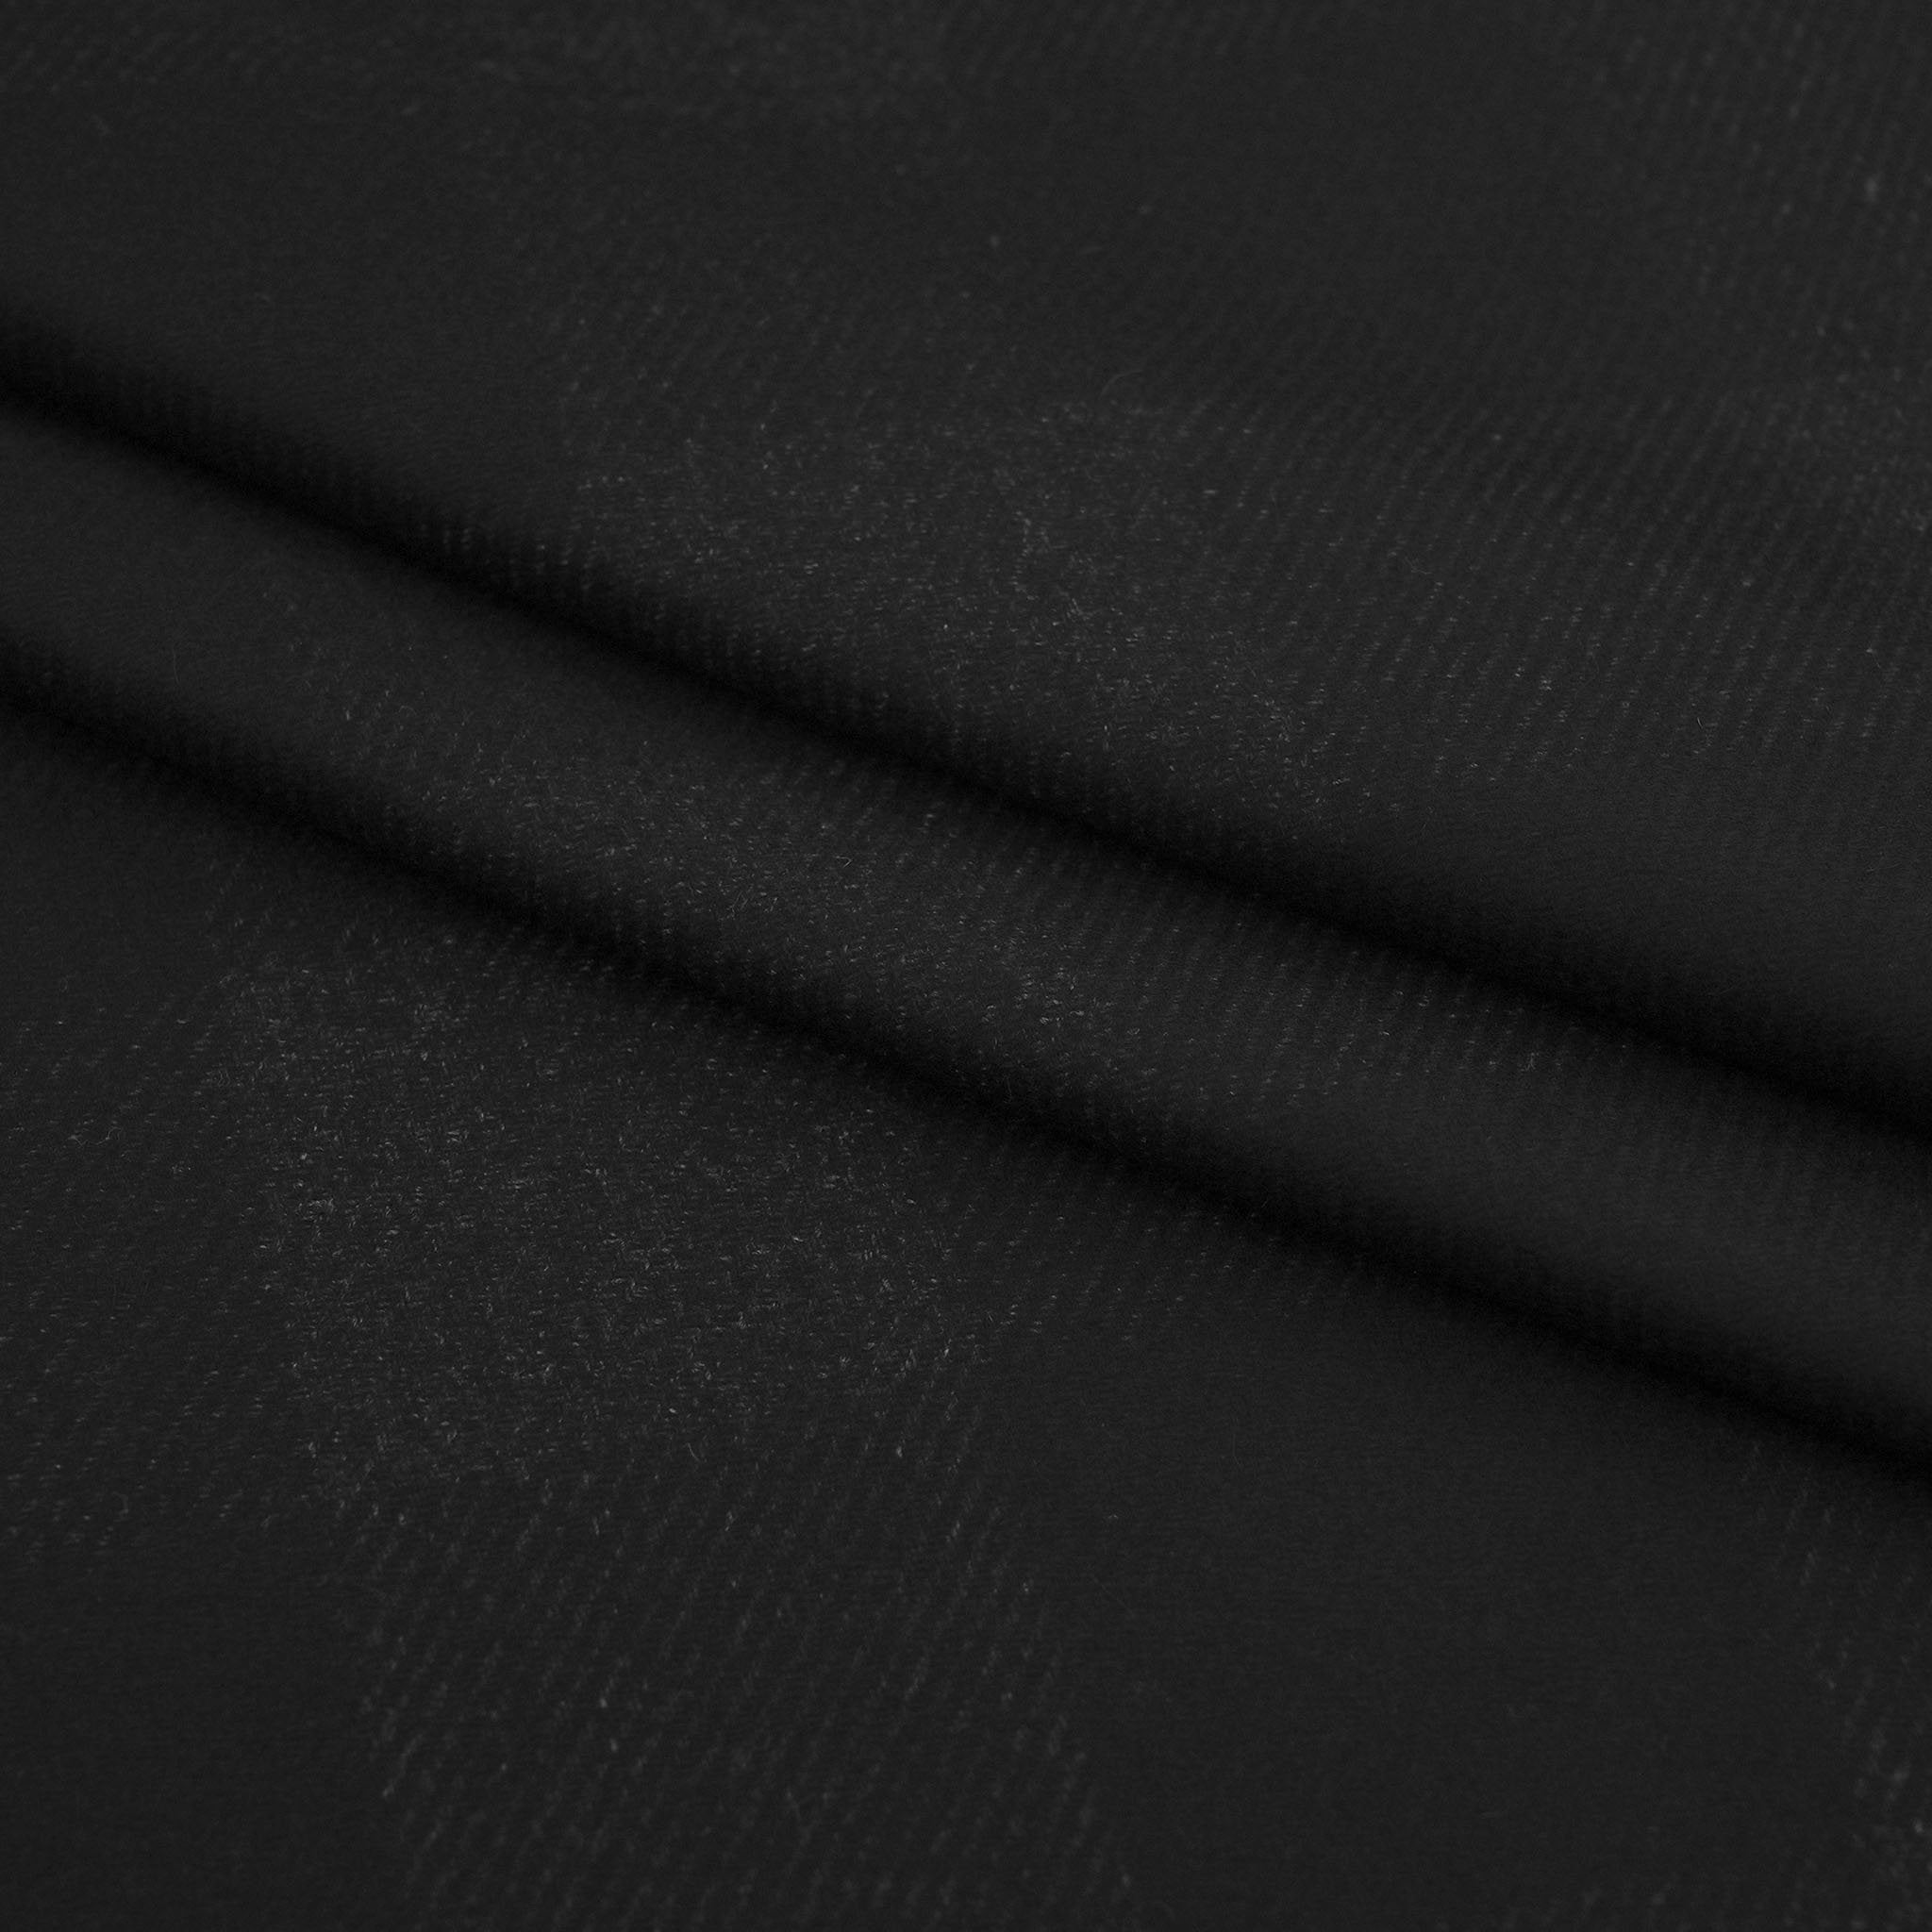 Black Fancy Coating Fabric 98724